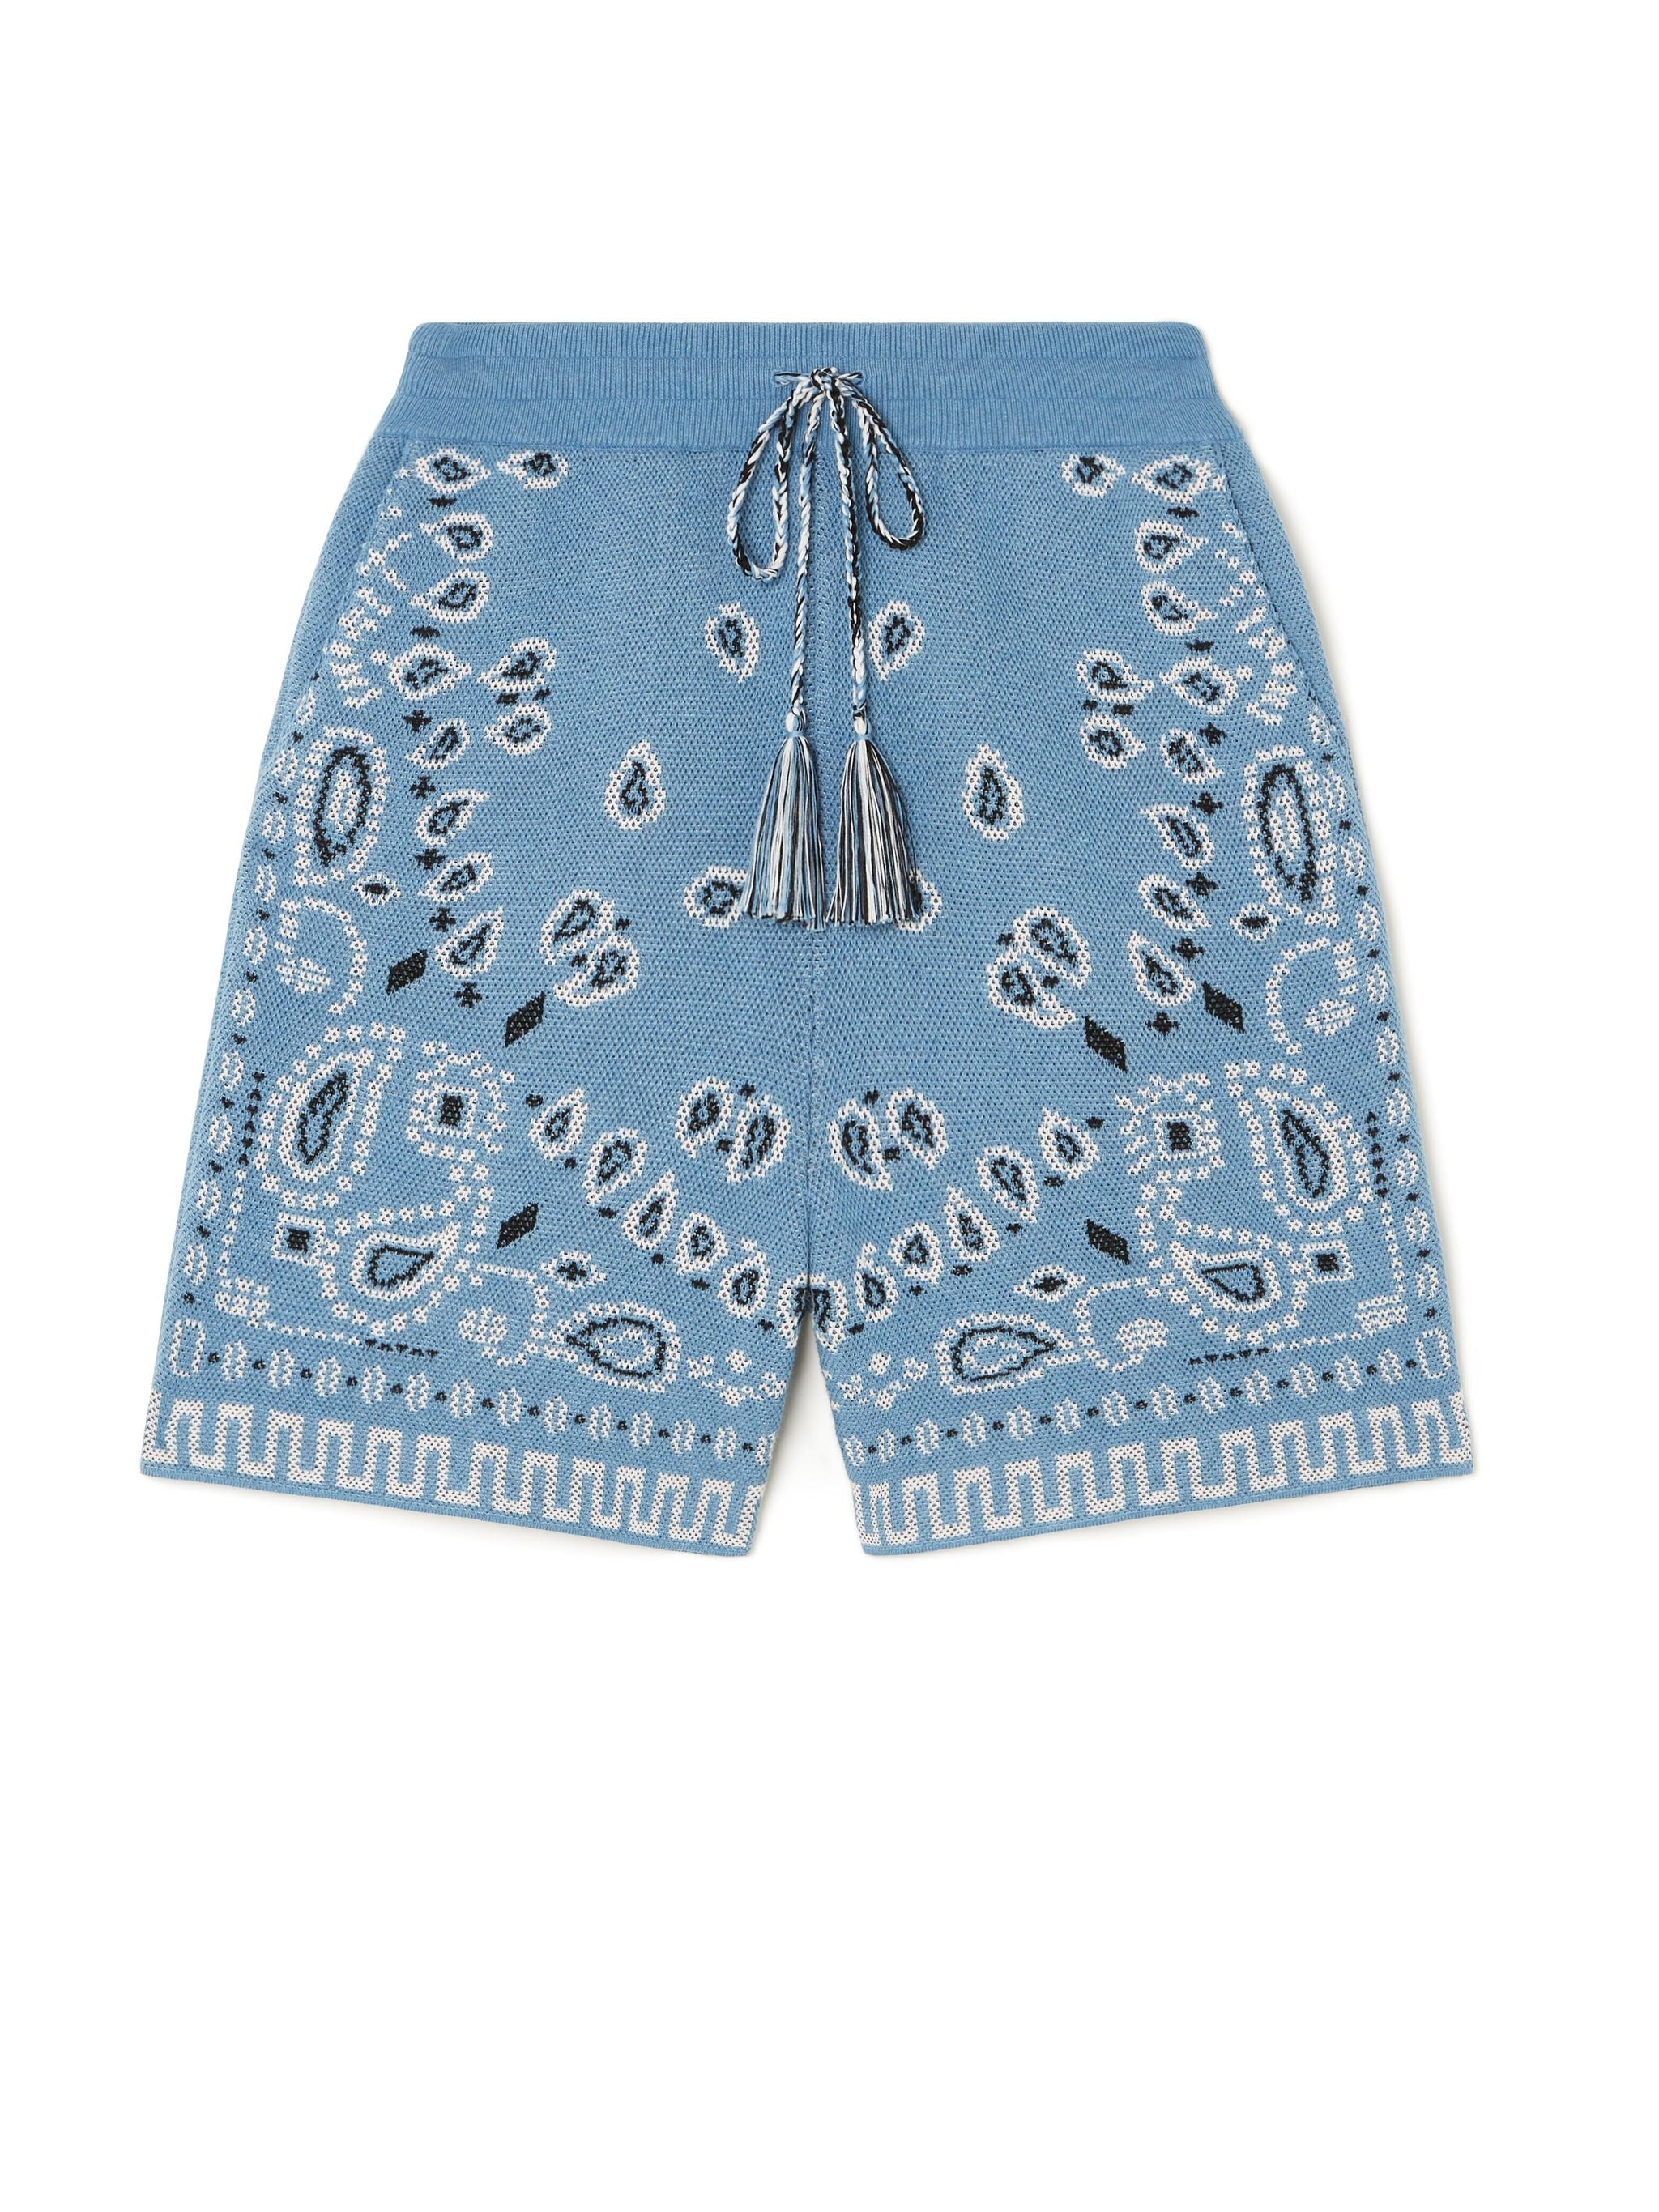 Louis Vuitton Monogram Bandana Short-sleeved Hoodie, Blue, XL